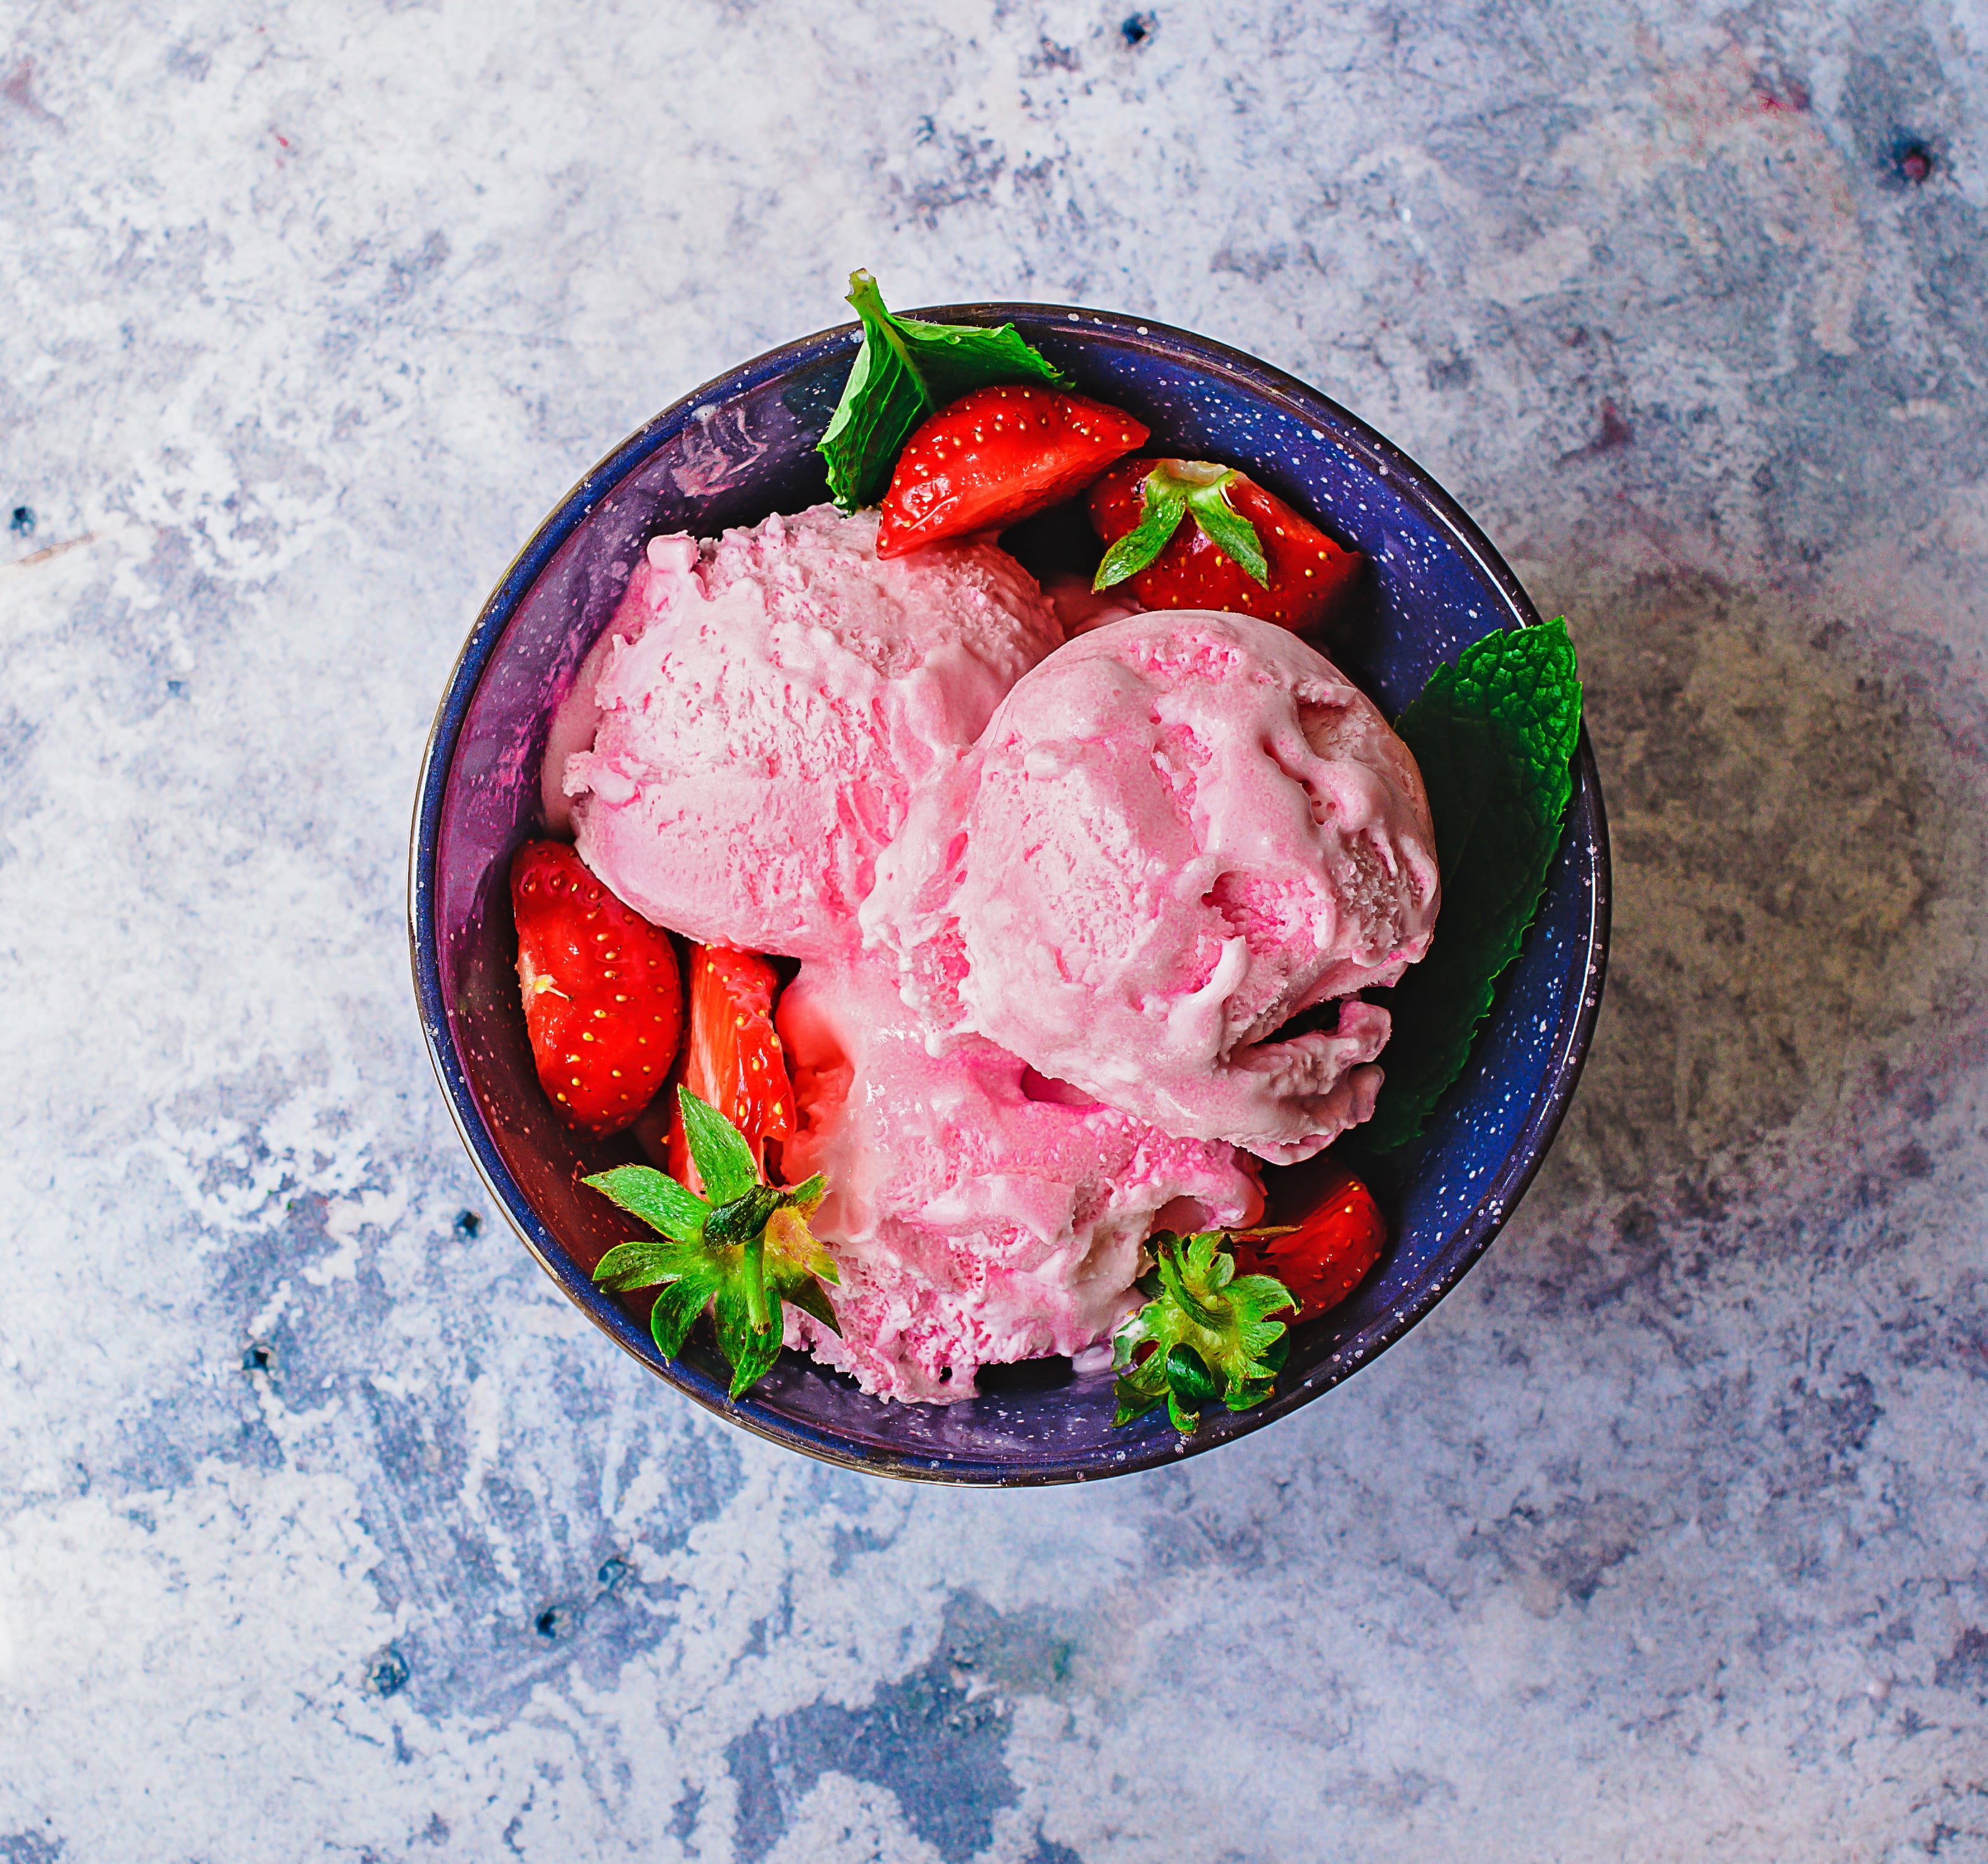 Ninja Creami Strawberry Ice Cream